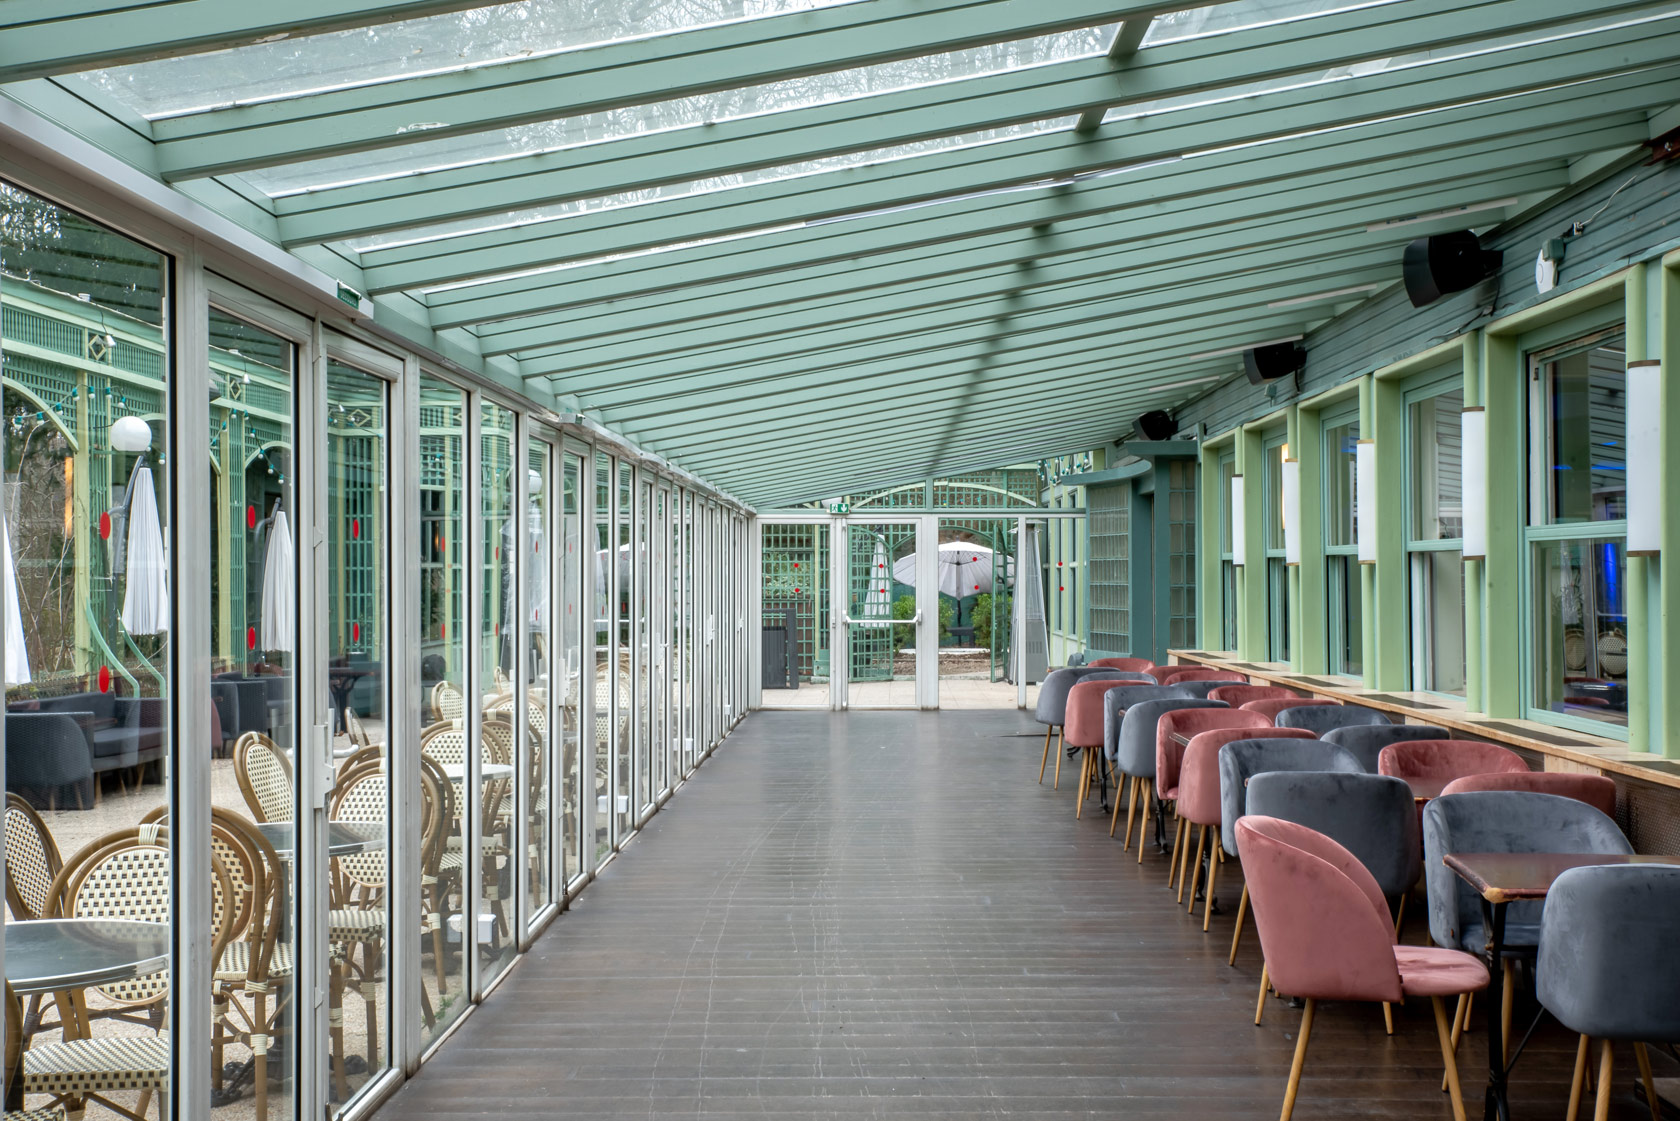 Restaurant veranda for privatization